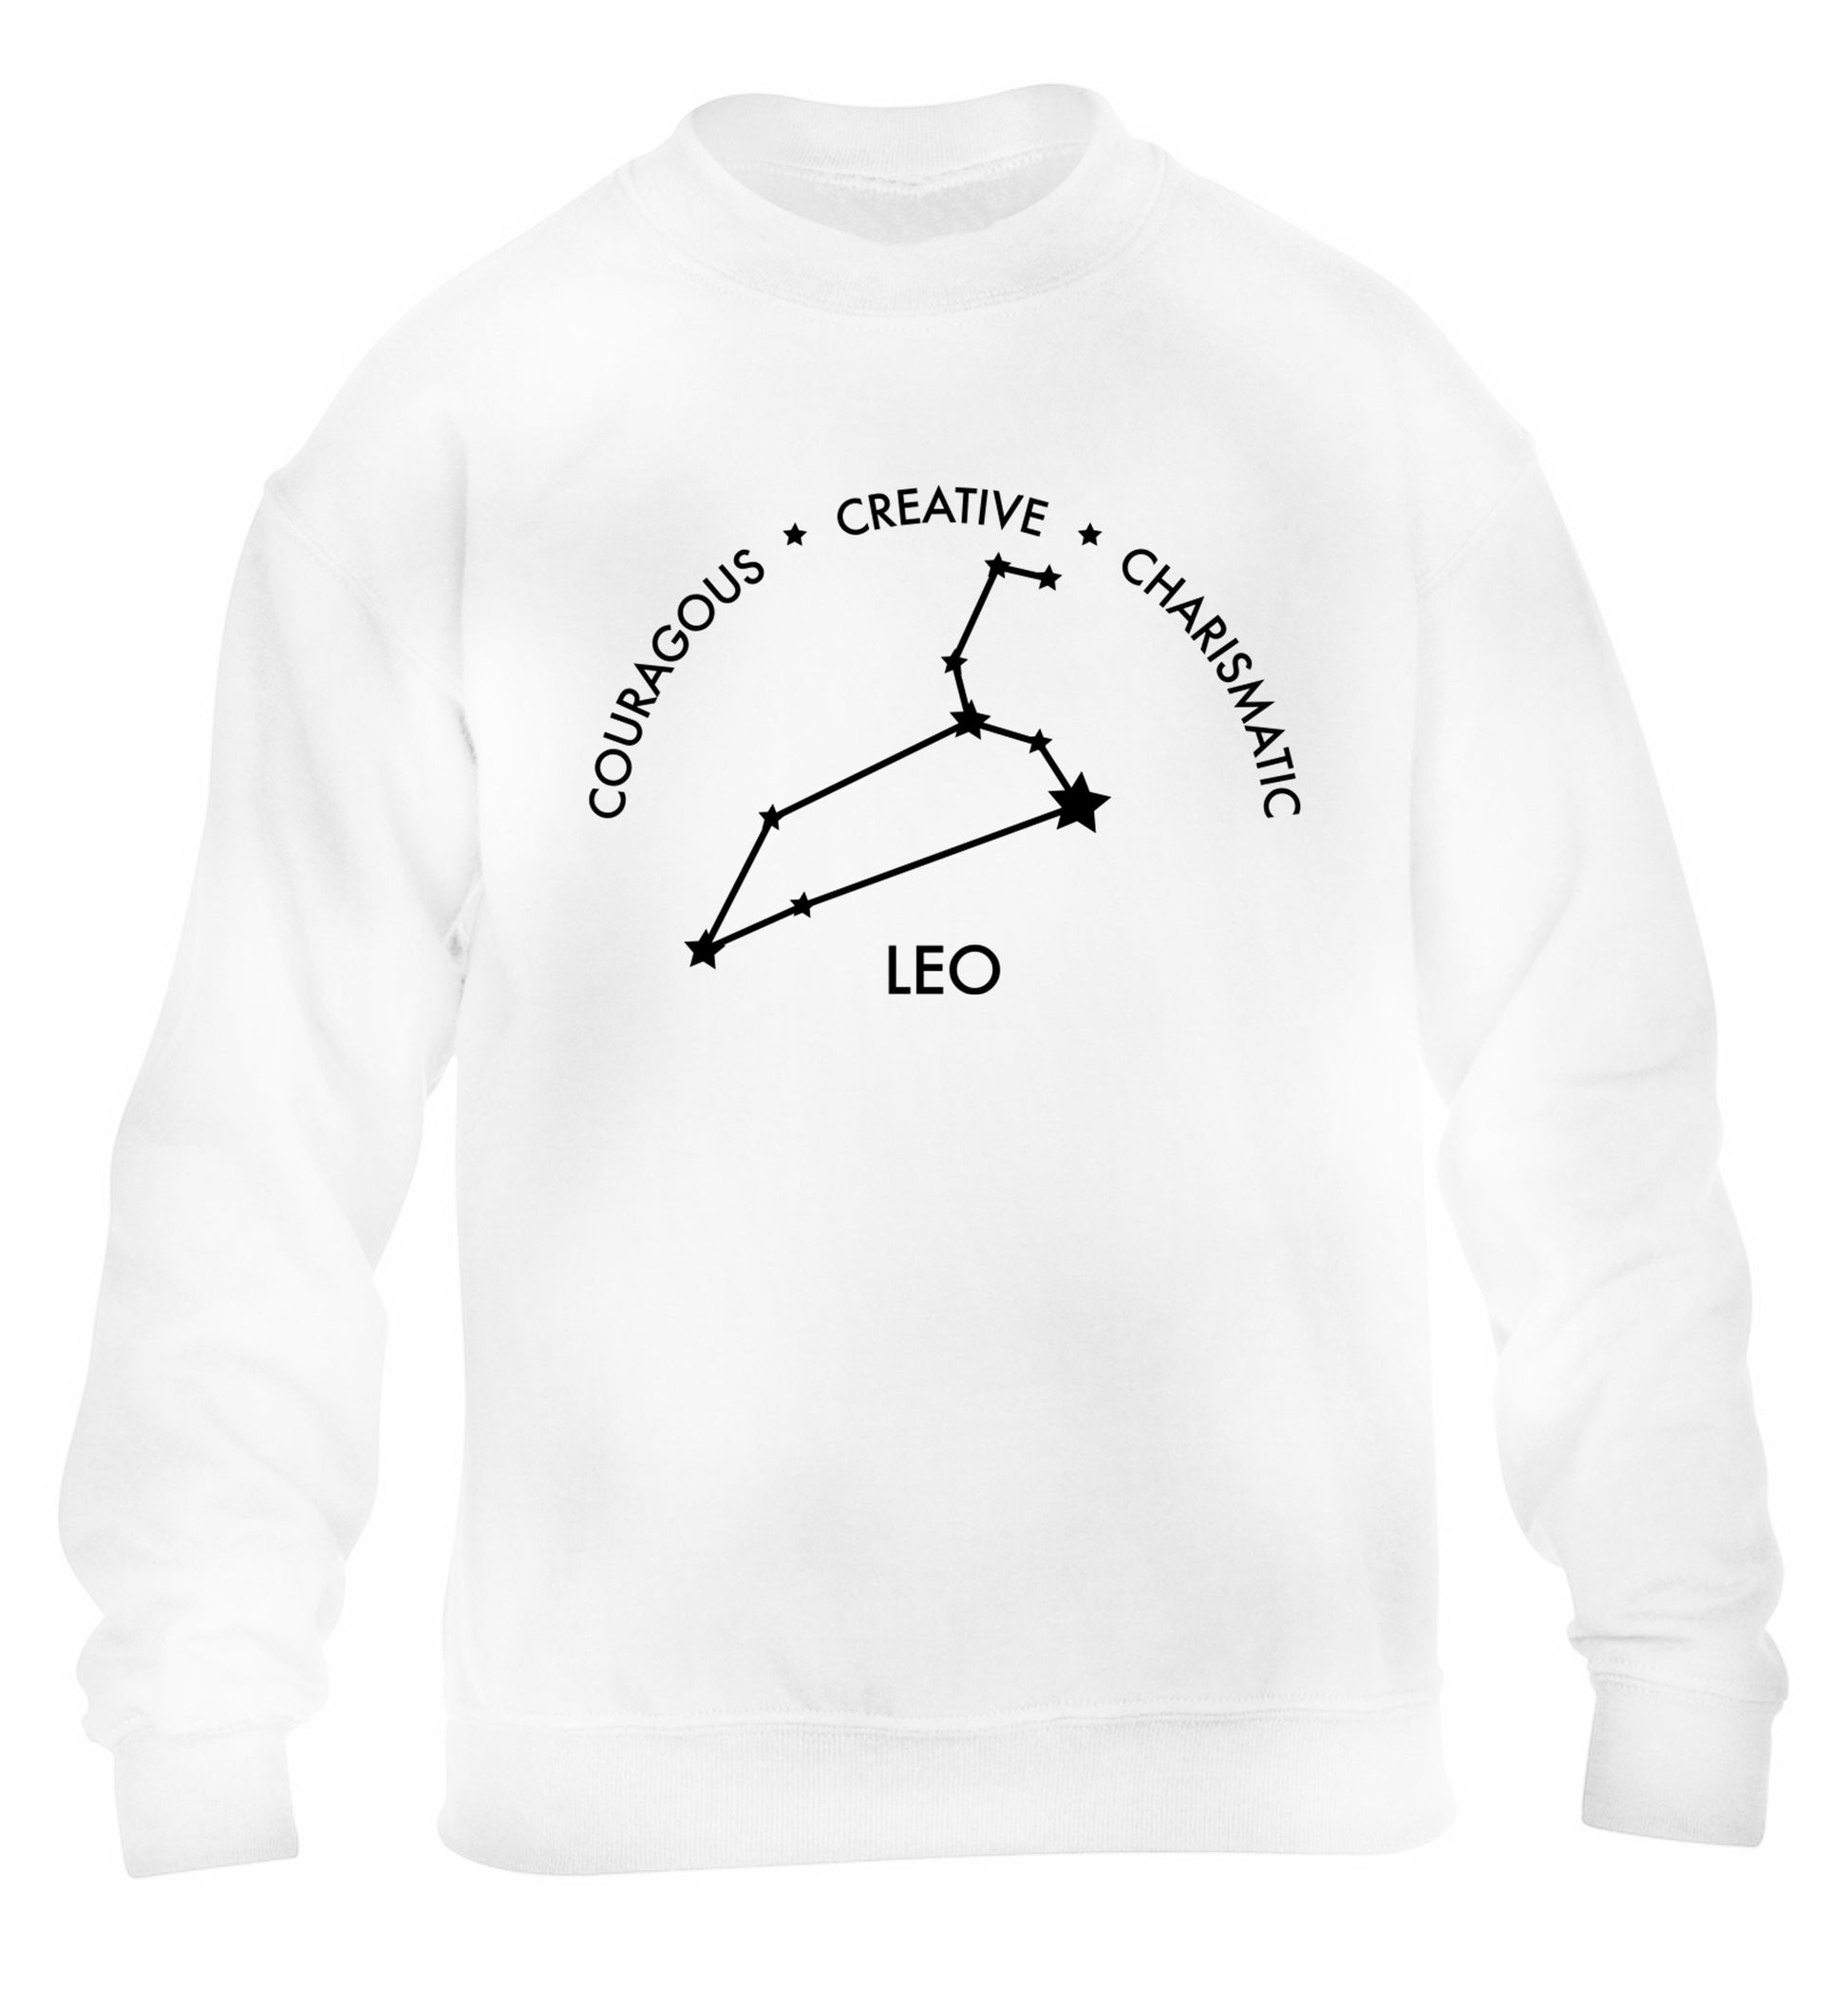 Leo - Courageous | Creative | Charismatic children's white sweater 12-13 Years